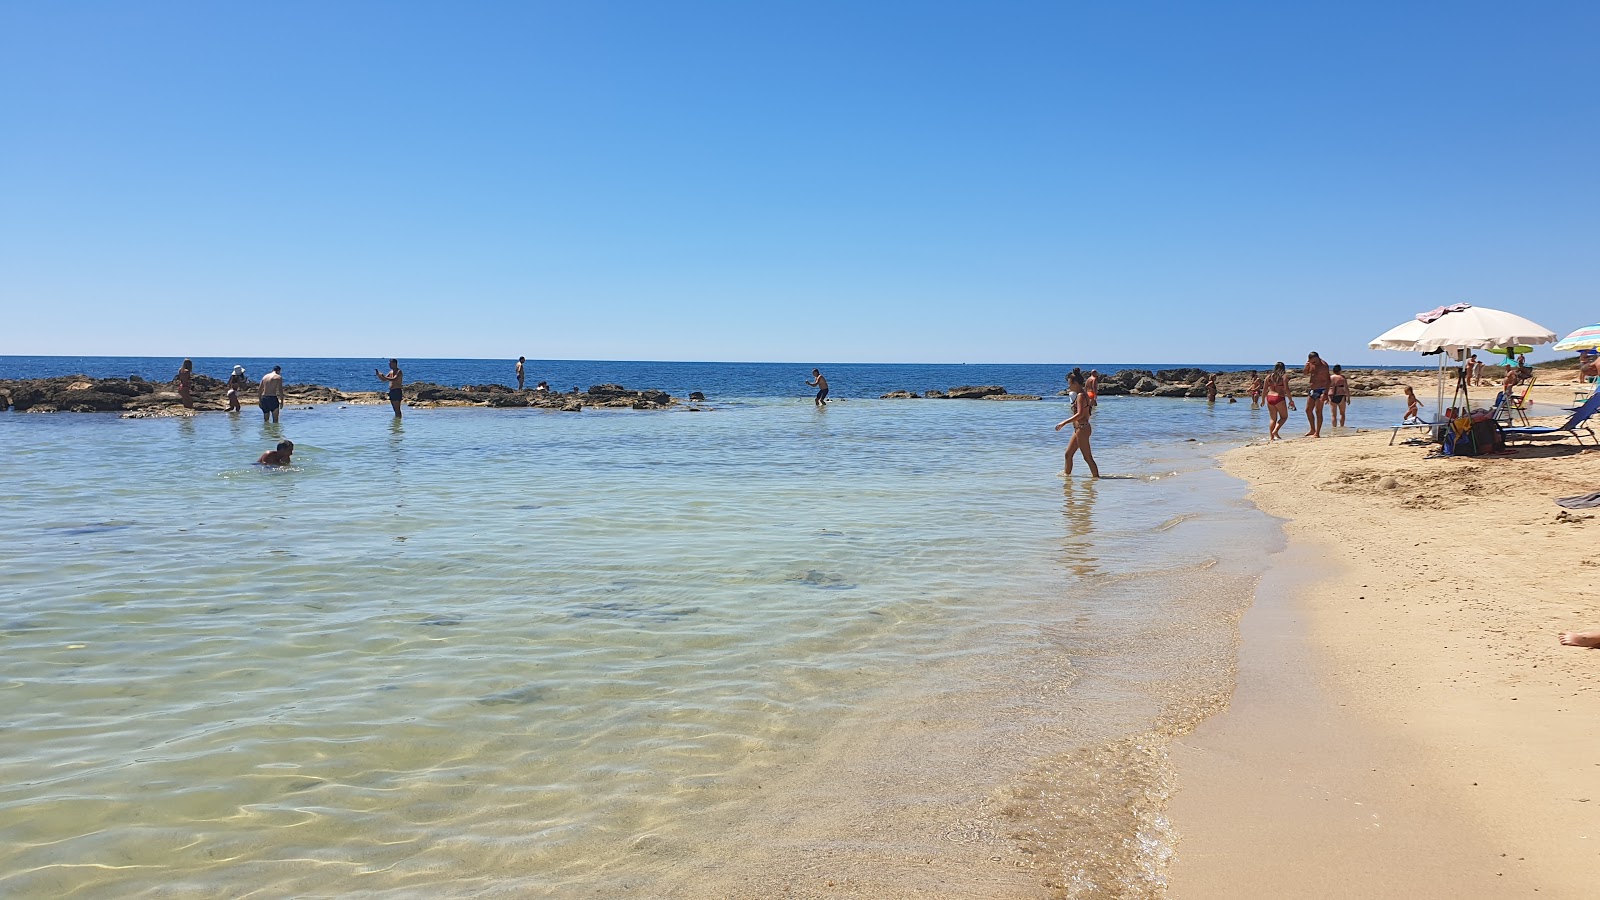 Spiaggia calette di salve'in fotoğrafı mavi saf su yüzey ile